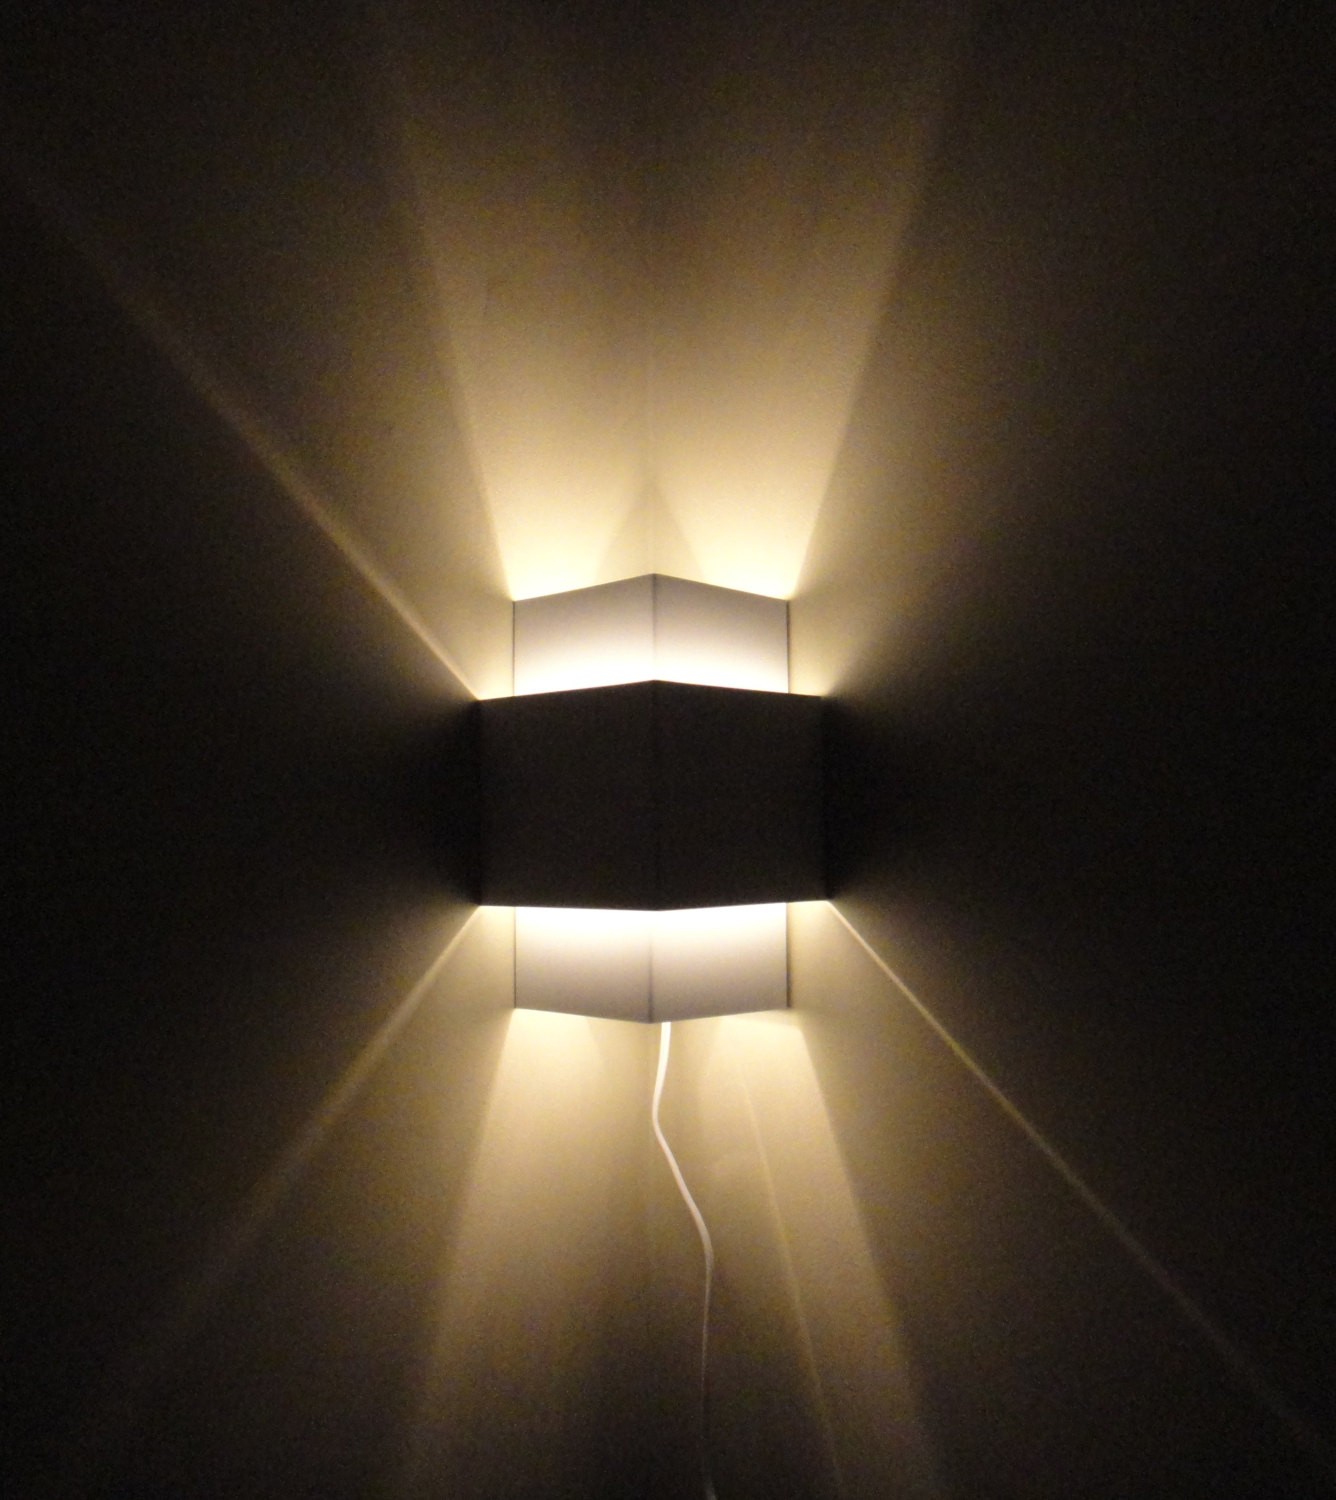 Corner lamp wall light fixture